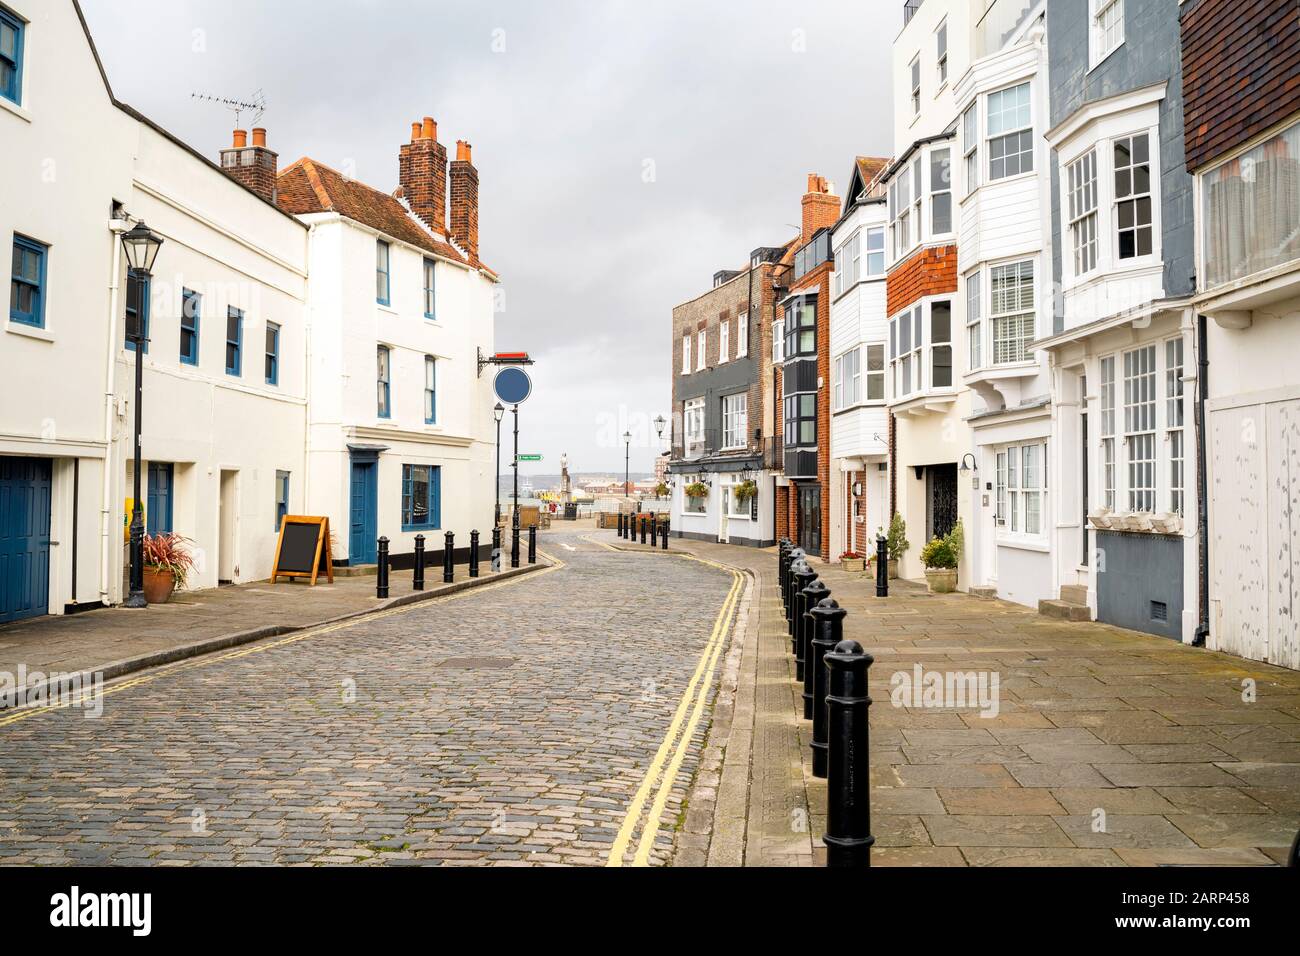 Empty street with historic housing, Old Portsmouth, England, UK Stock Photo